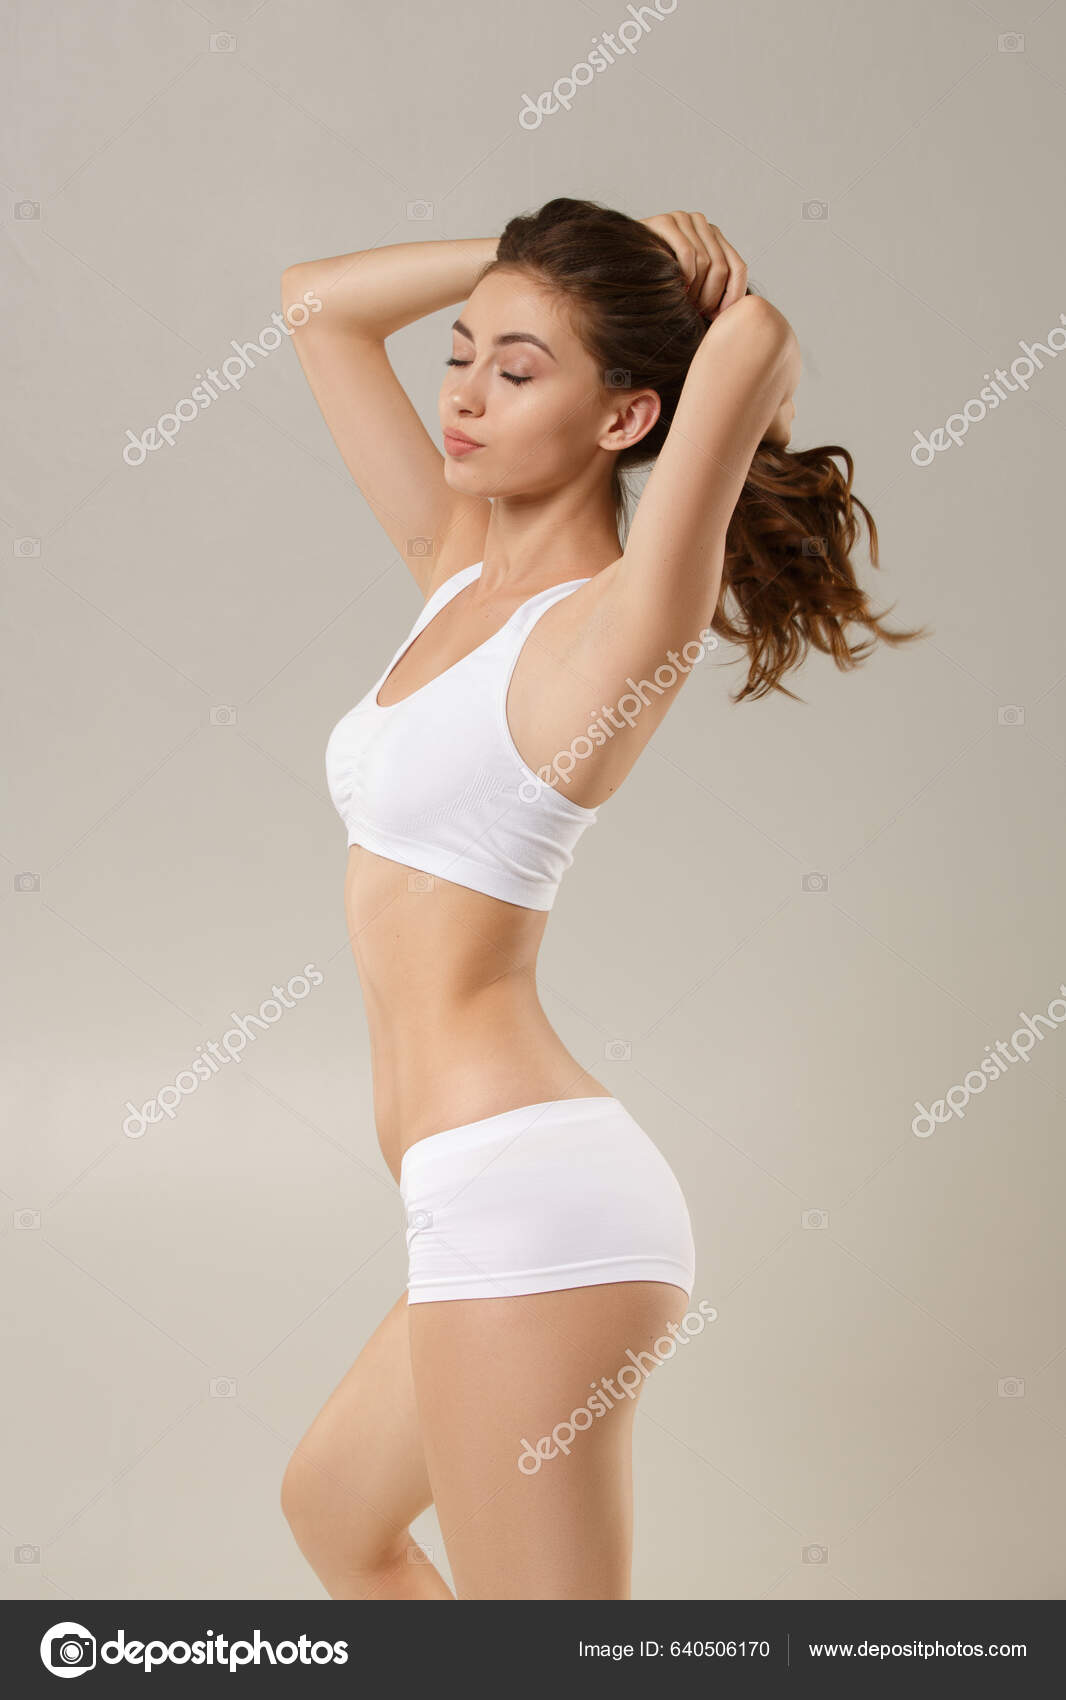 Feeling Beautiful Woman Natural Slim Tanned Body Underwear Plays